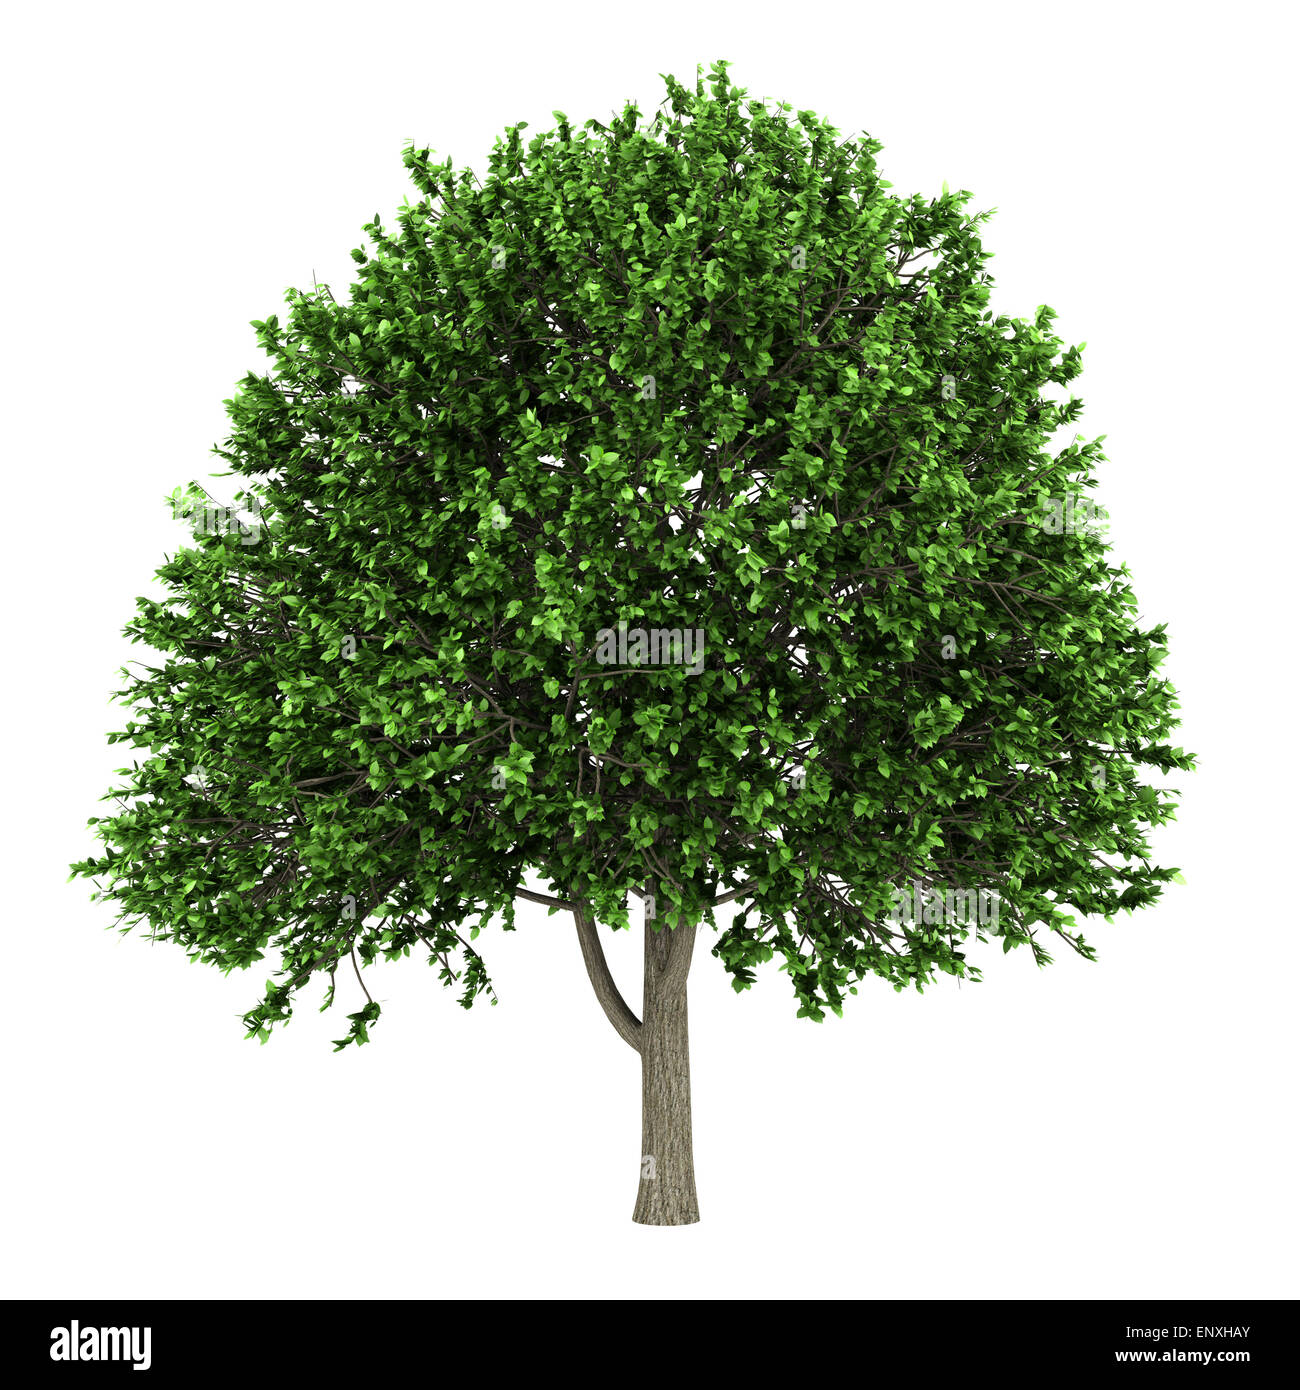 American elm tree isolati su sfondo bianco Foto Stock